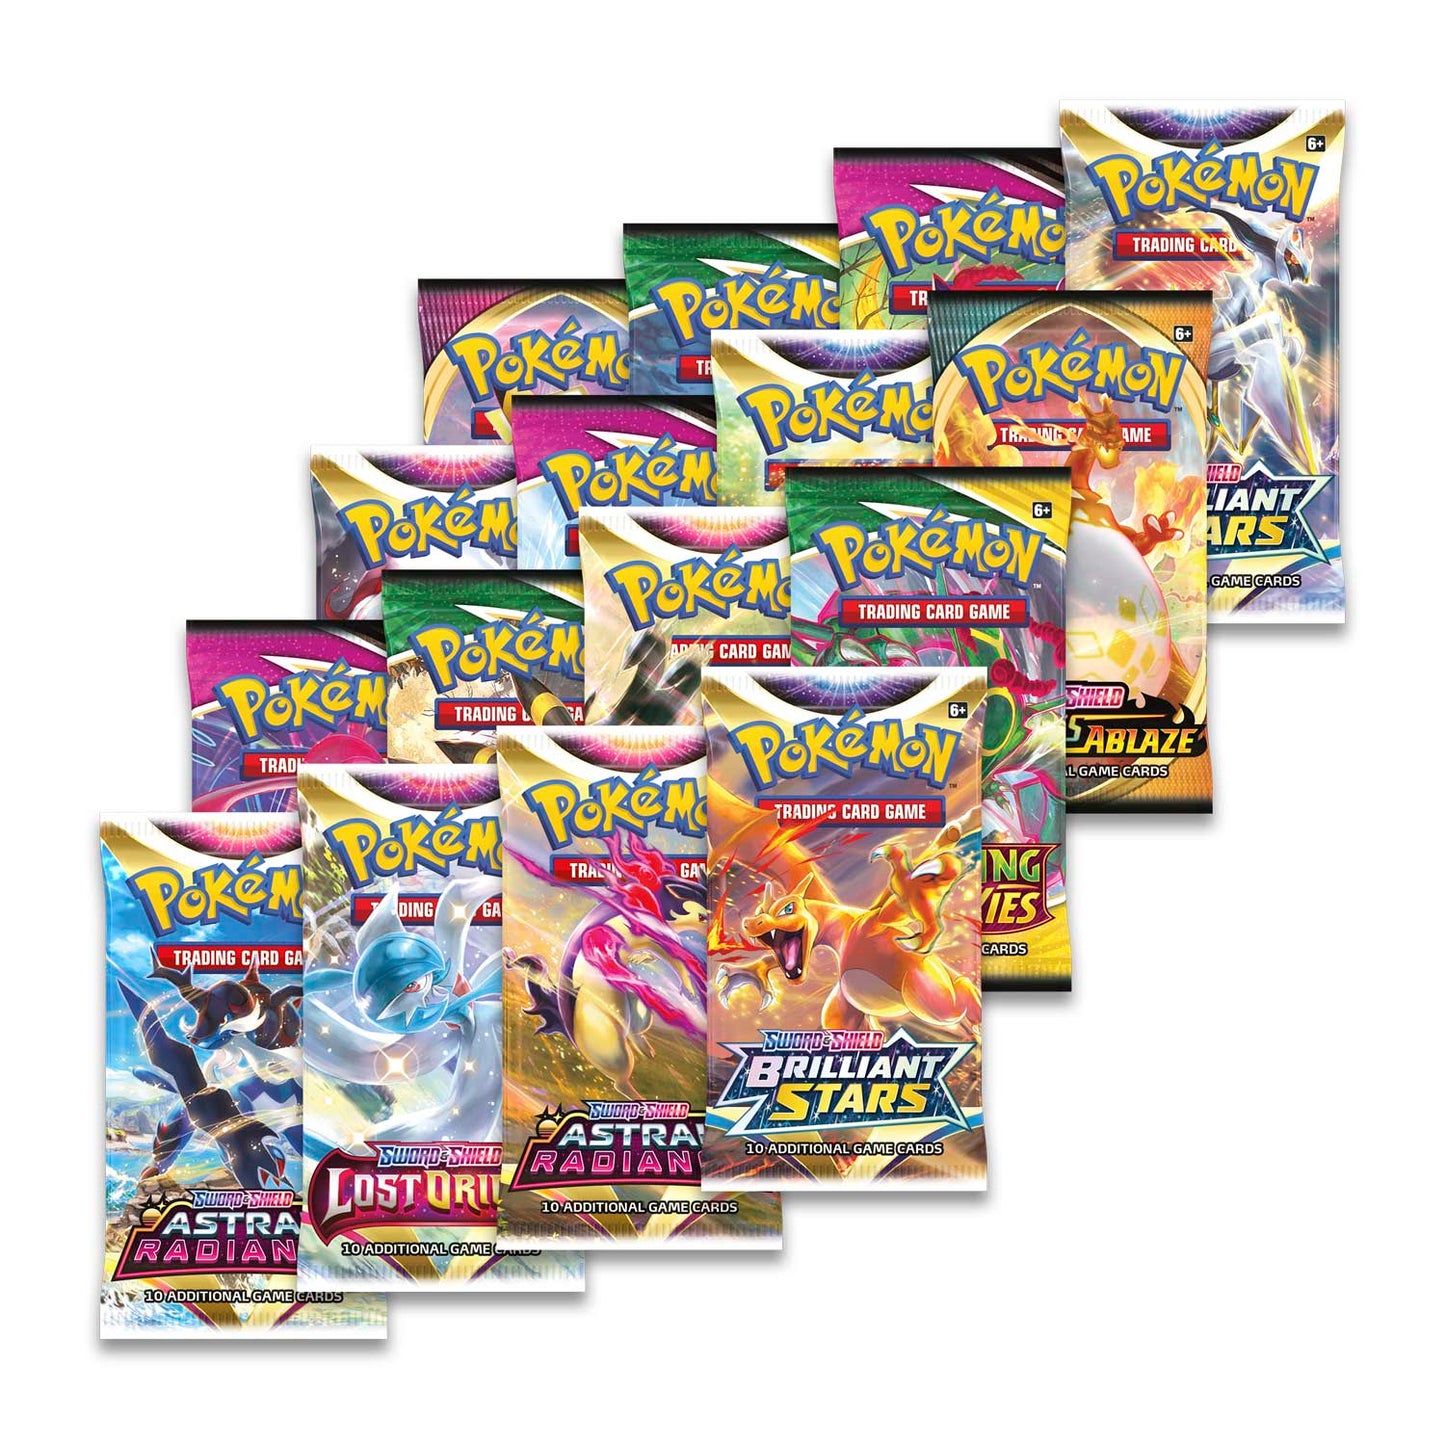 Pokémon TCG Bundle: Ultra Premium Collection Charizard